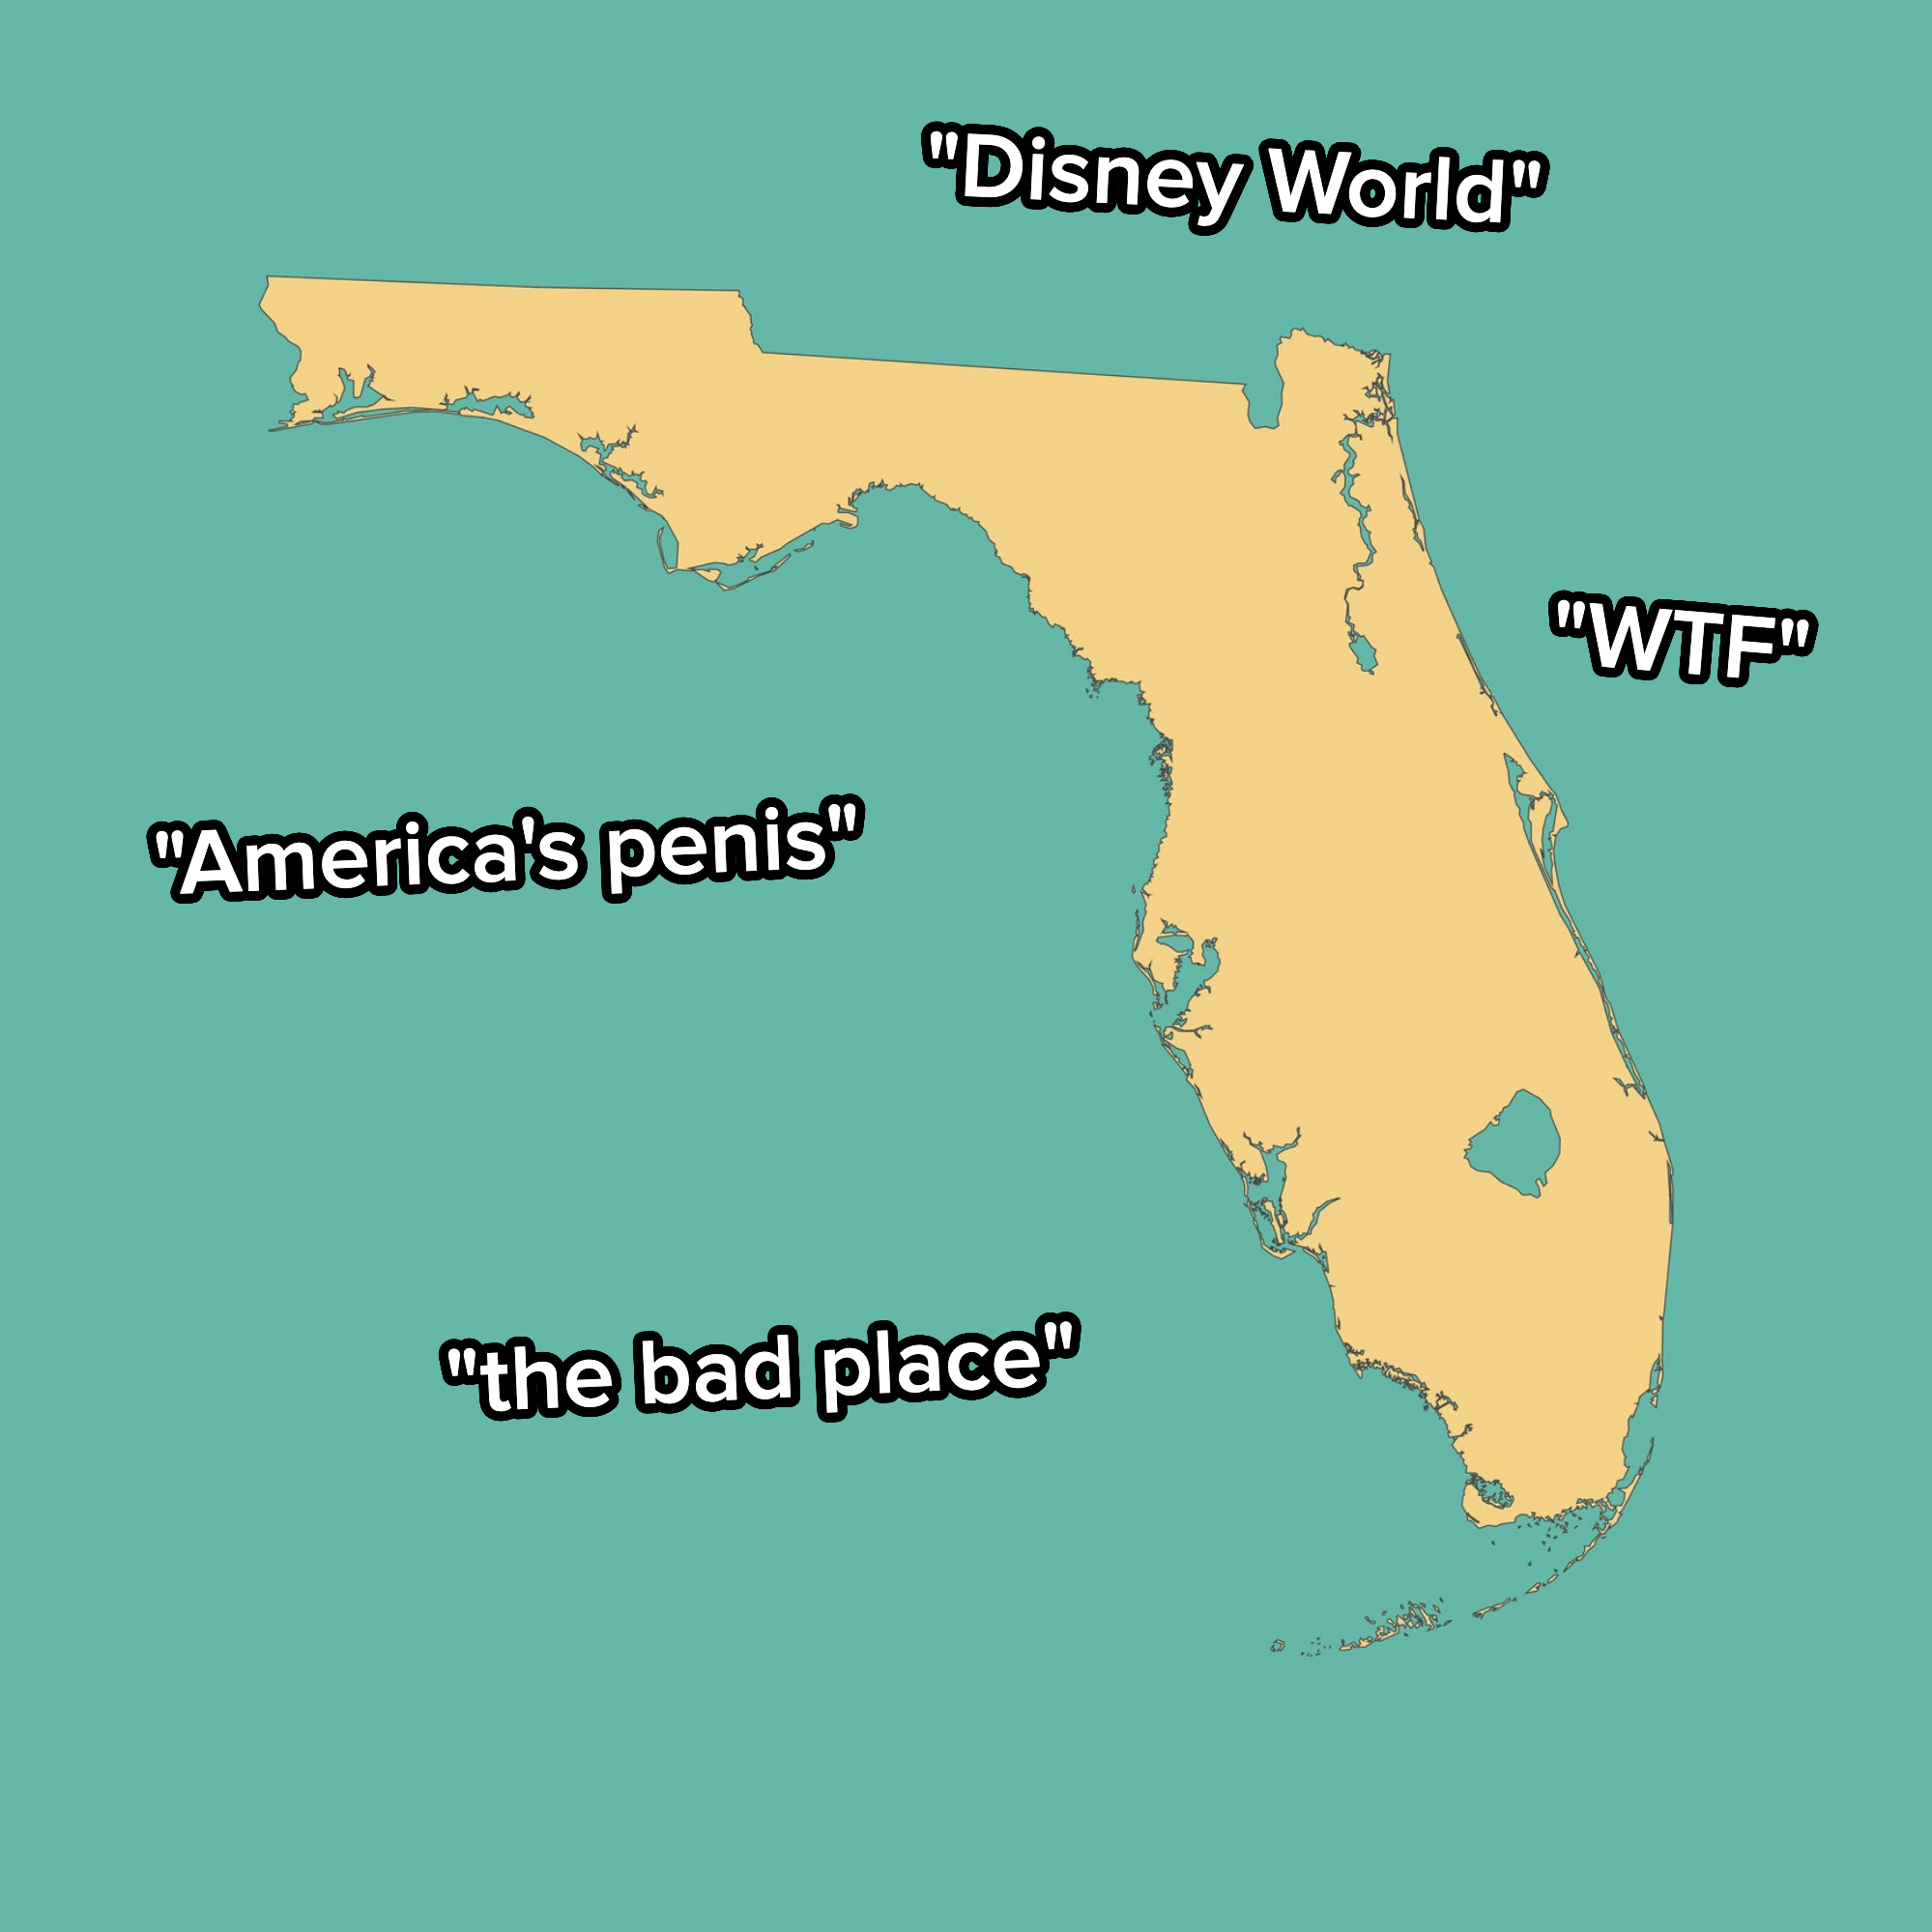 Outline of Florida